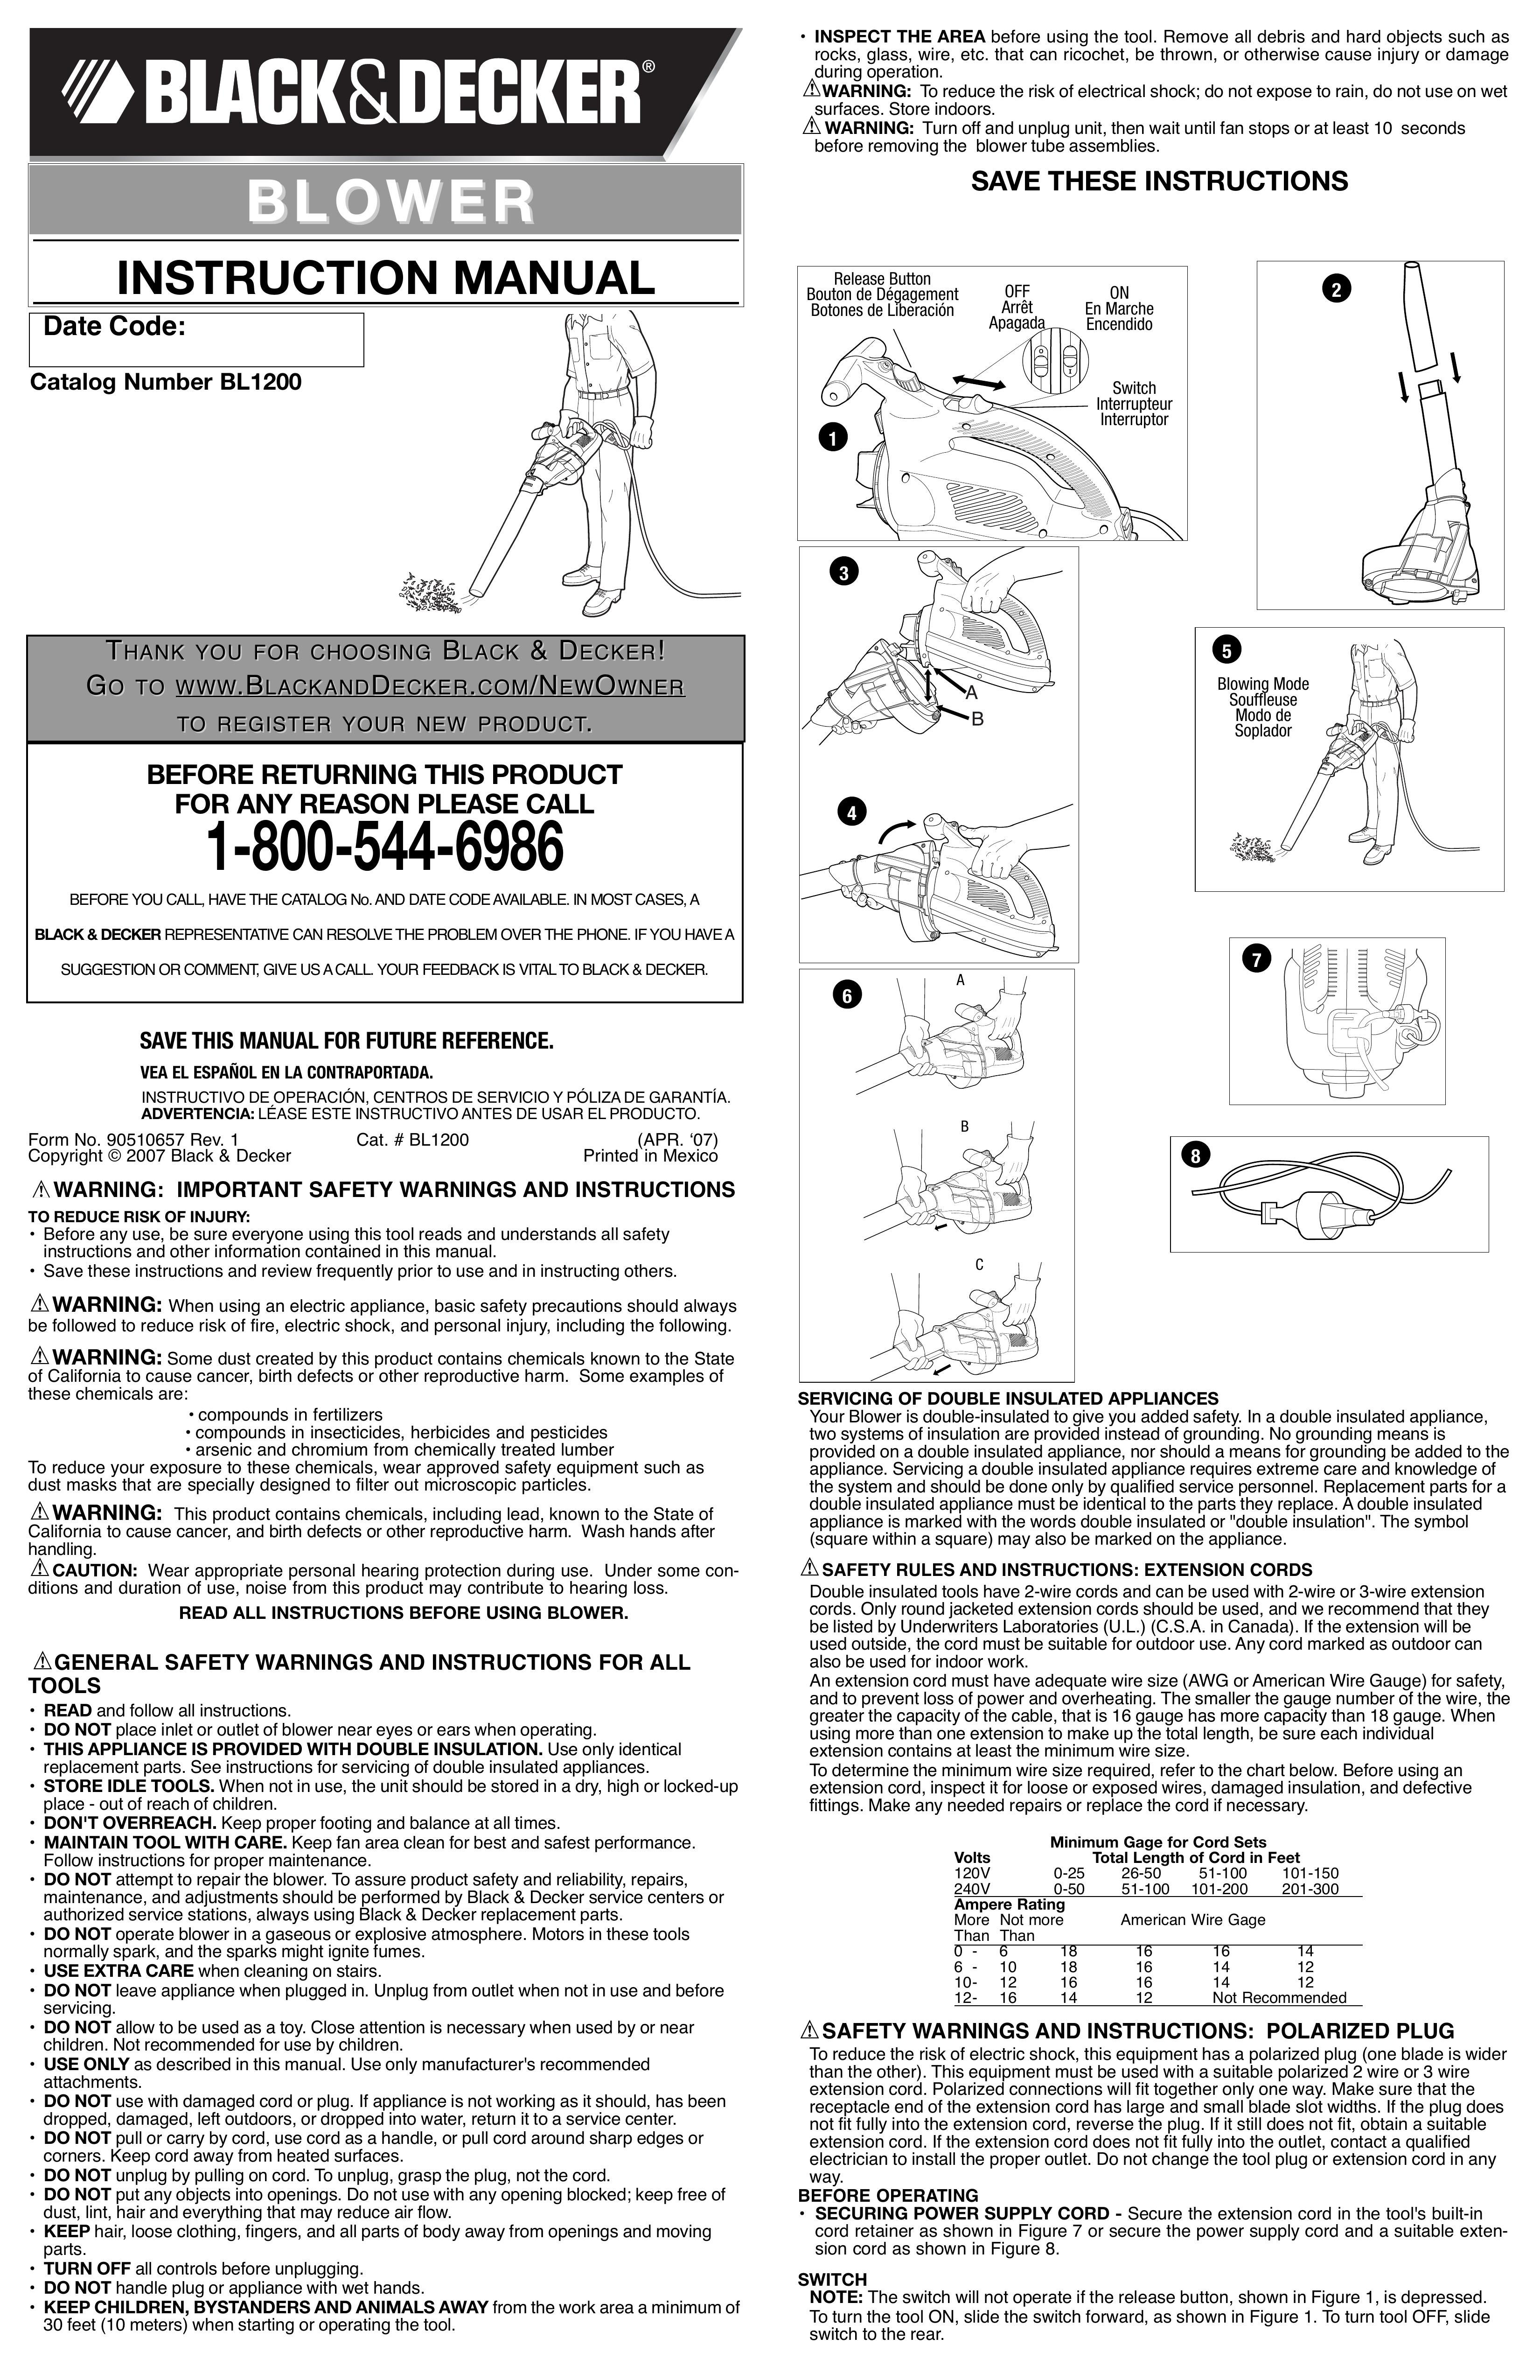 Black & Decker 90510657 Blower User Manual